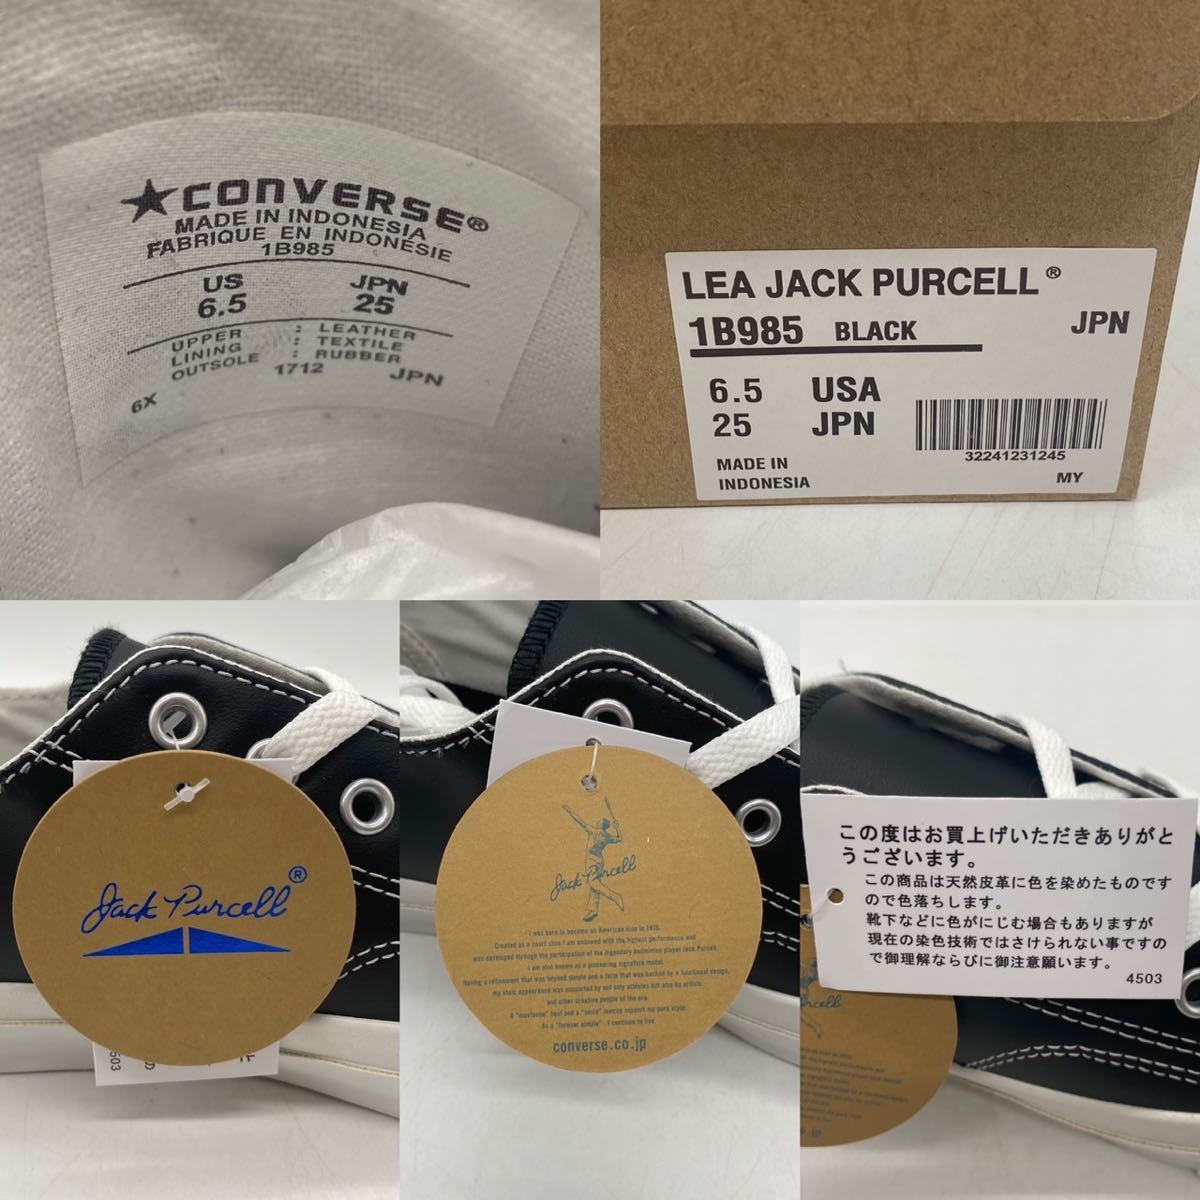 [25cm] new goods CONVERSE LEA JACK PURCELL BLACK Converse LEA Jack purcell leather black Indonesia made (1B985) 3062